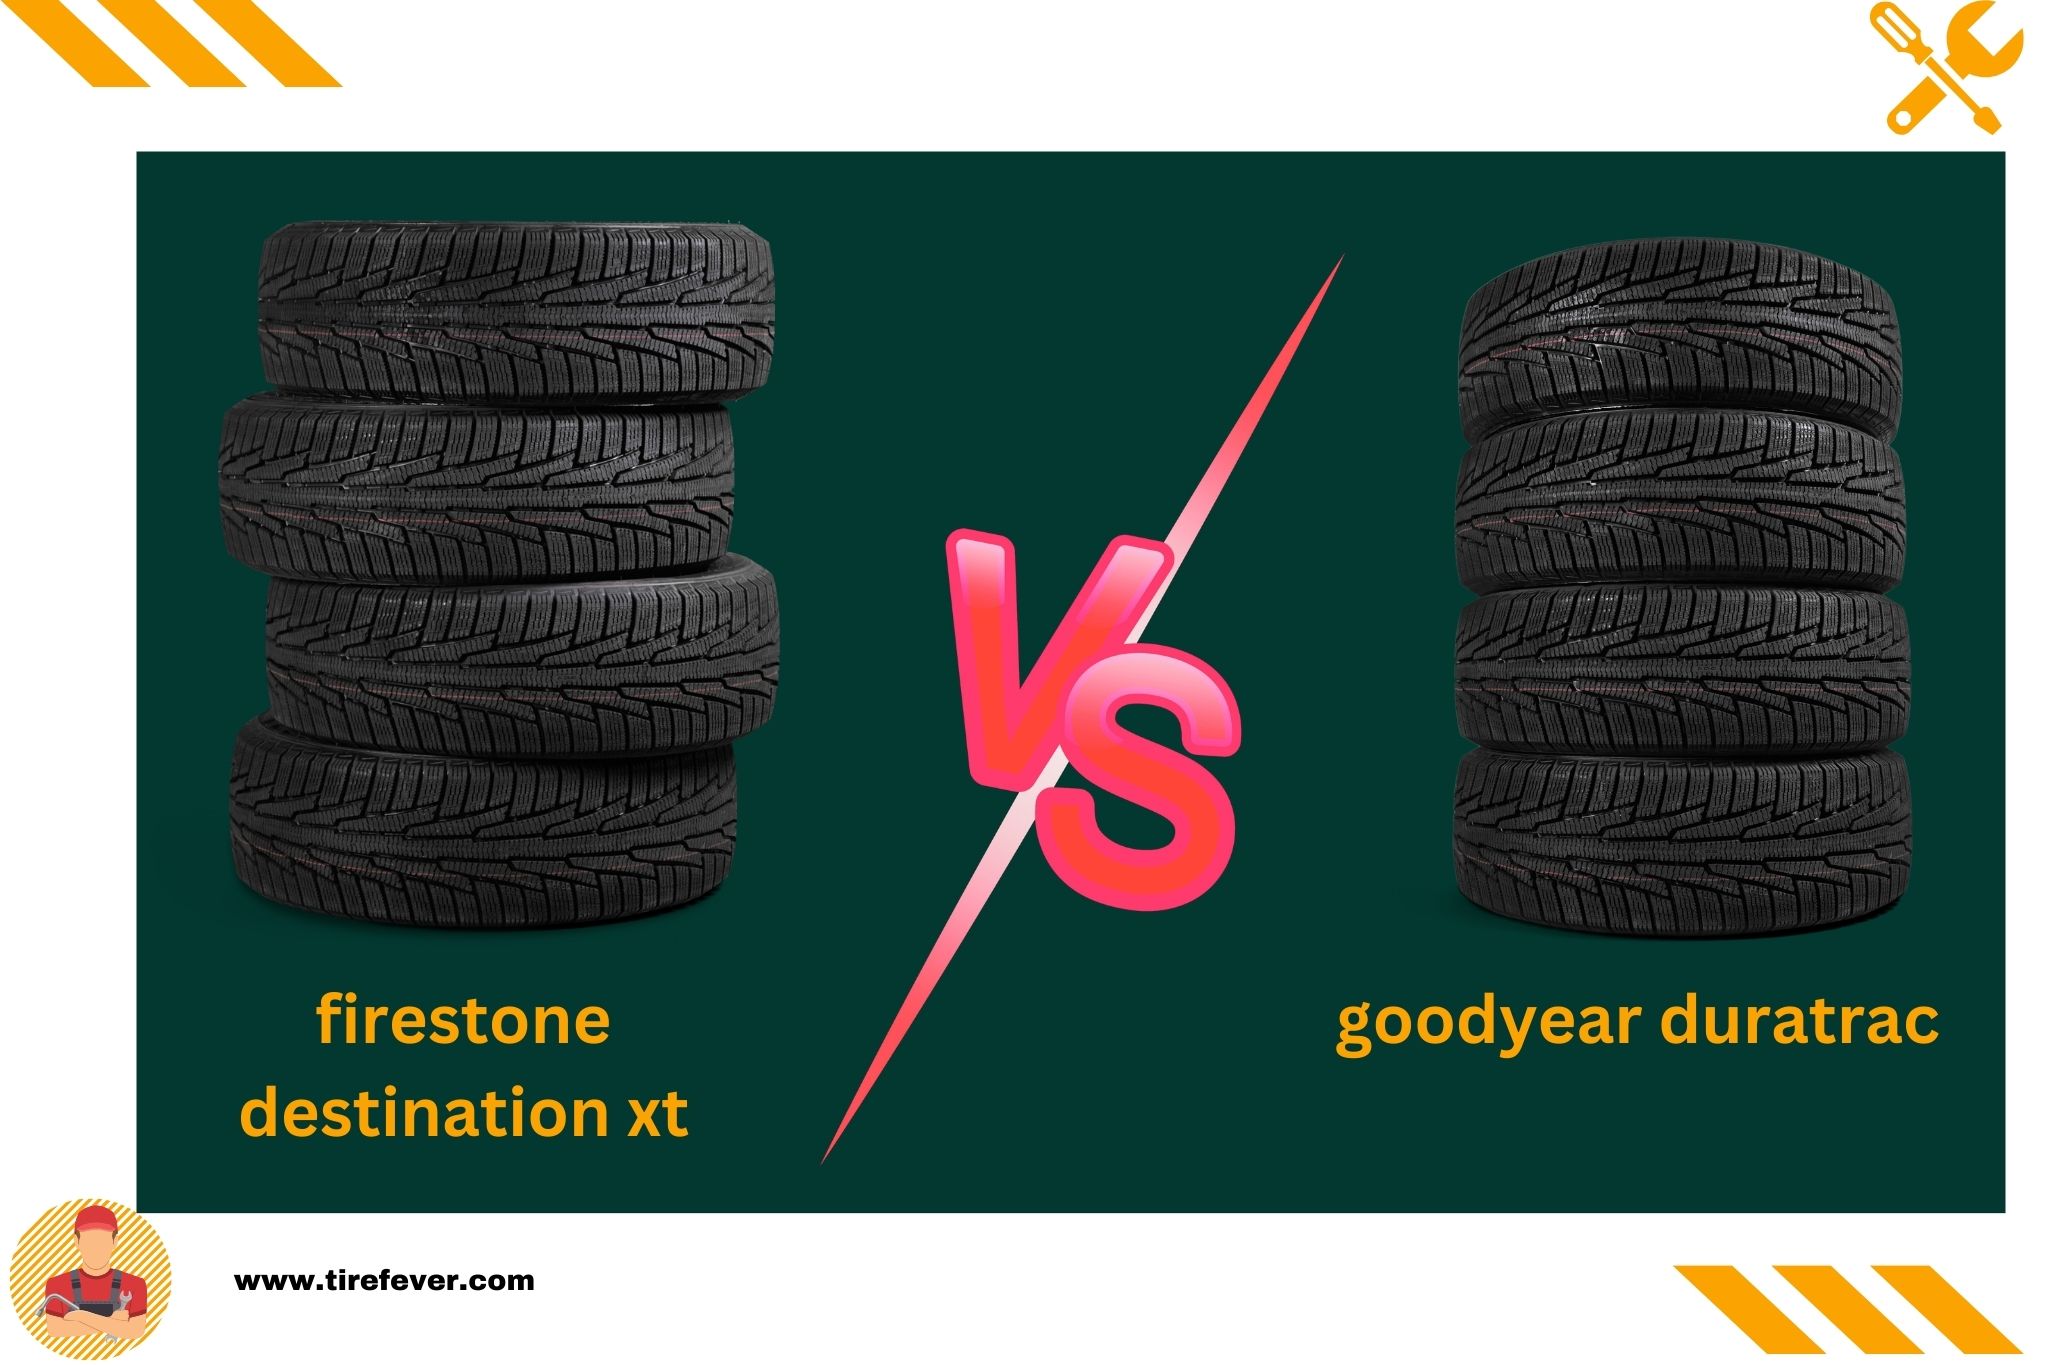 firestone destination xt vs goodyear duratrac